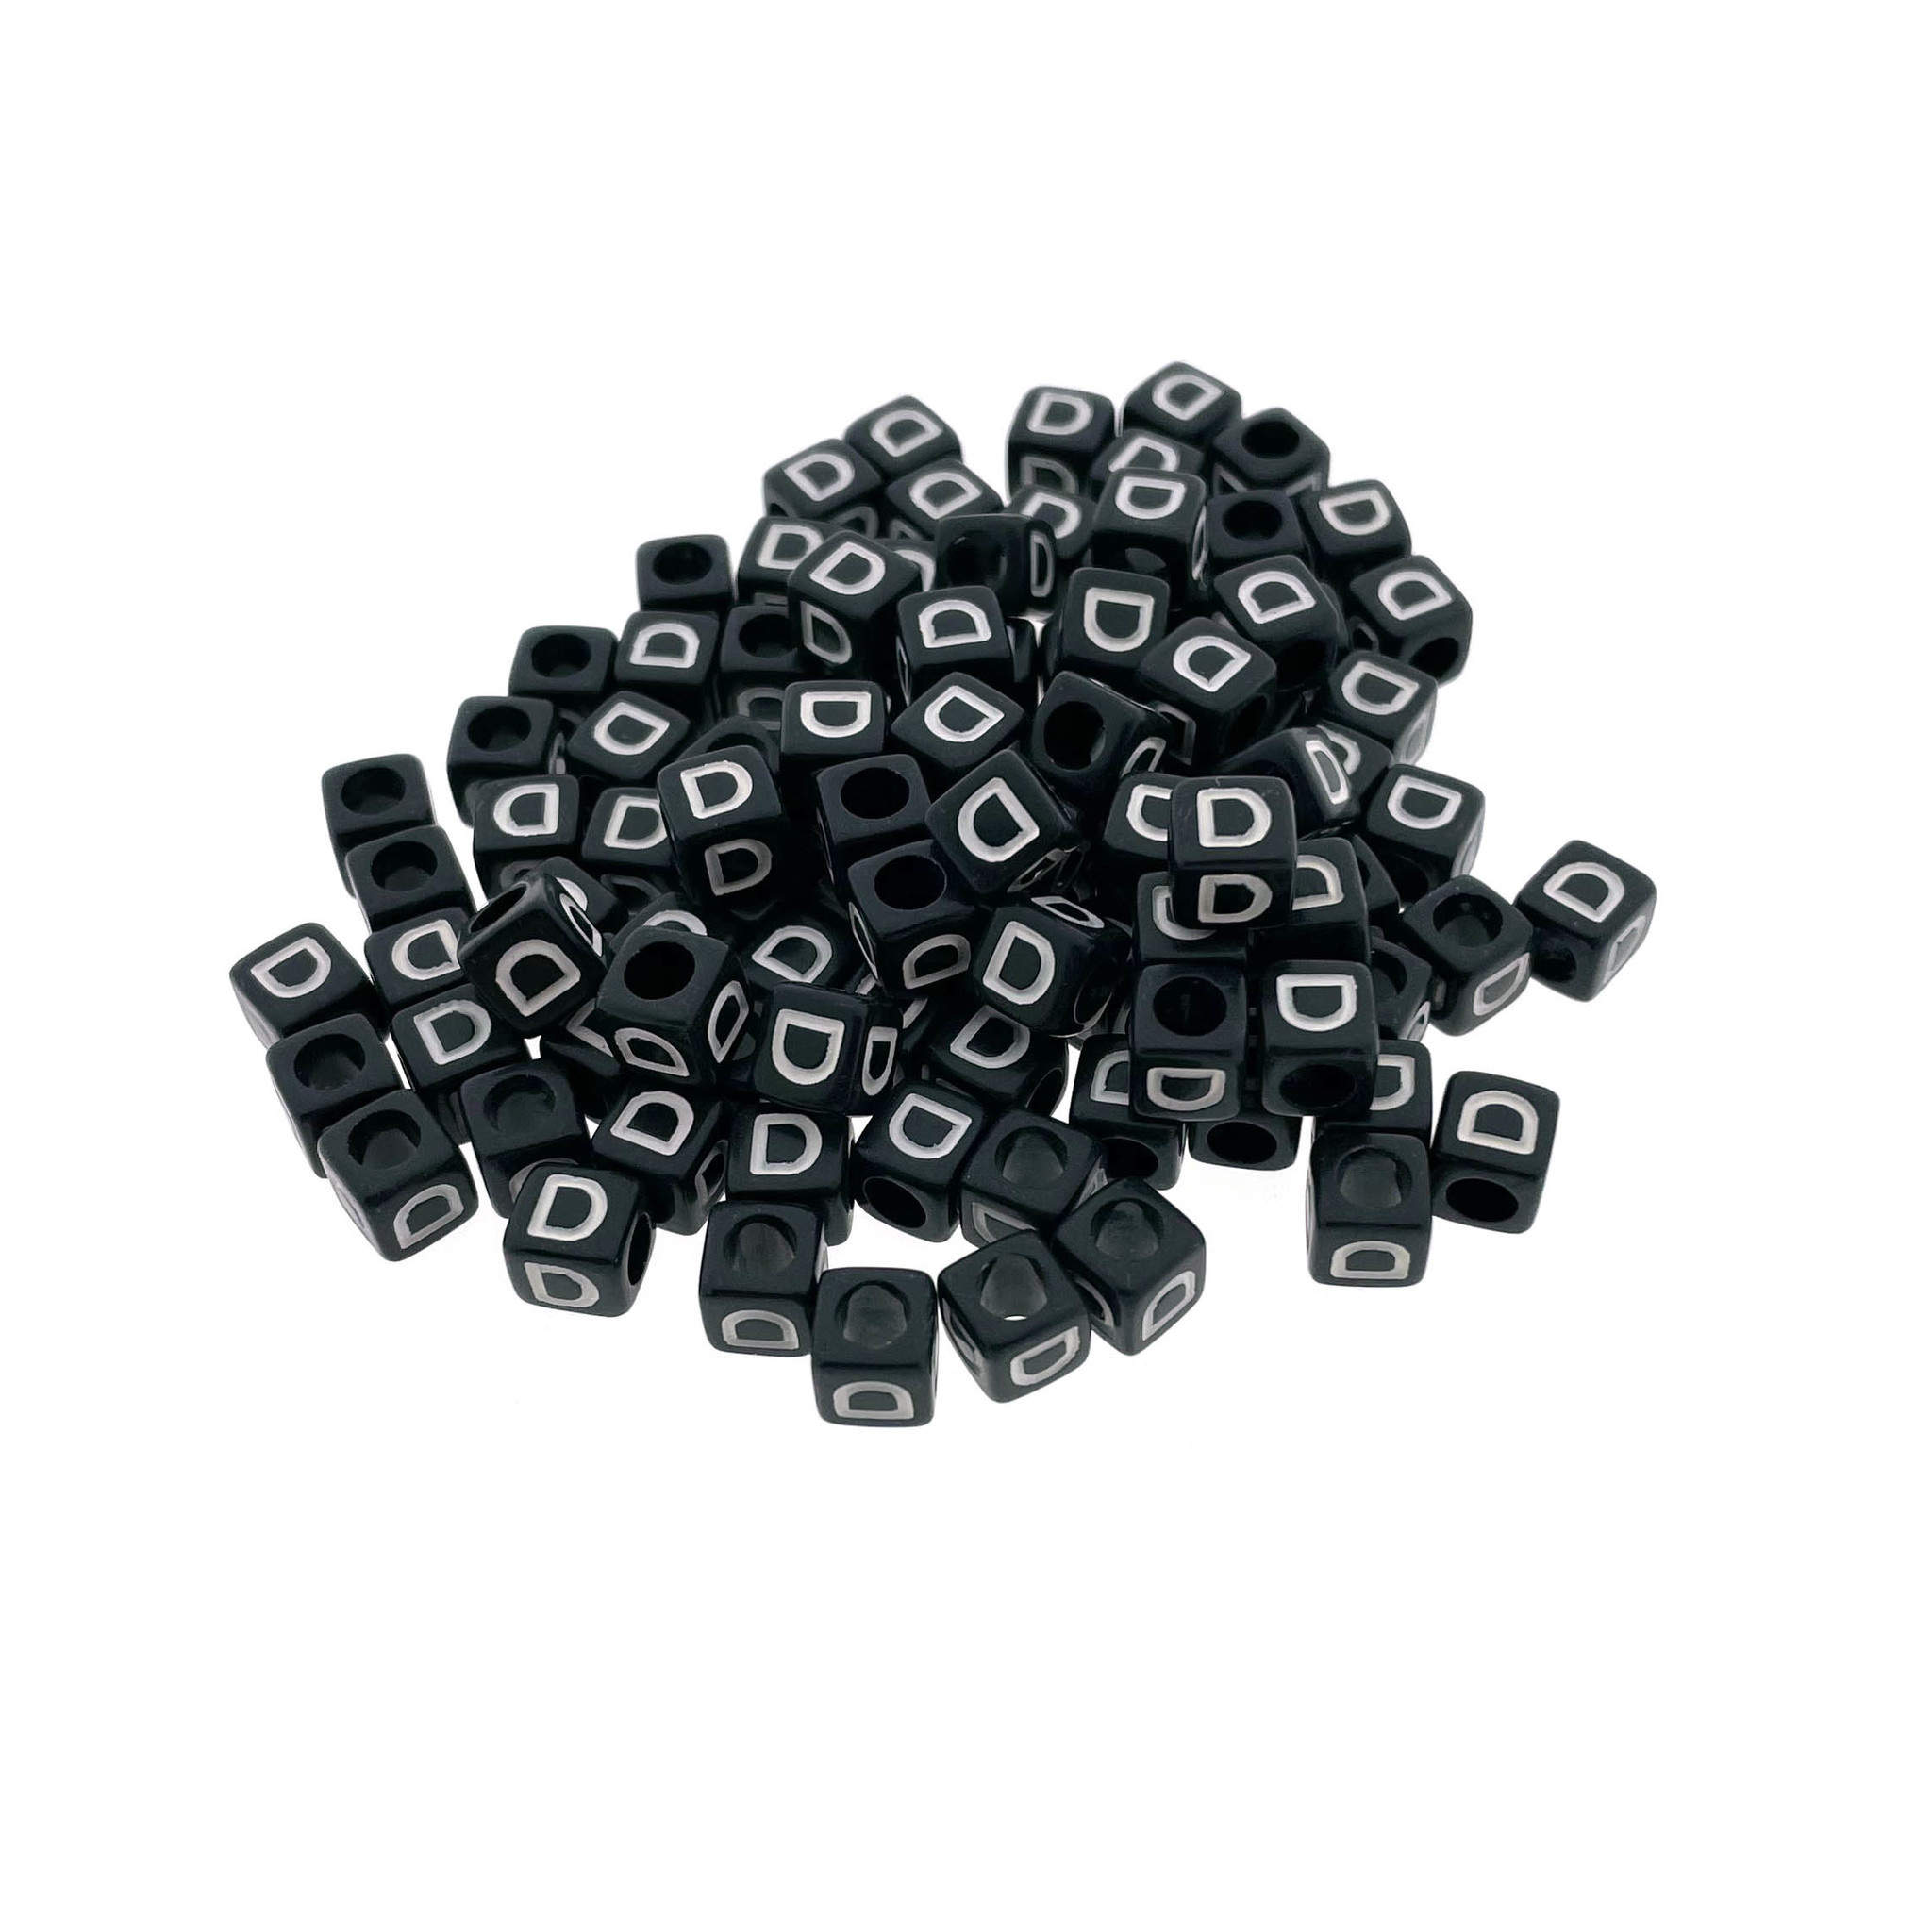 Buy Paracord alphabet letter beads Black D at 123Paracord - 123Paracord